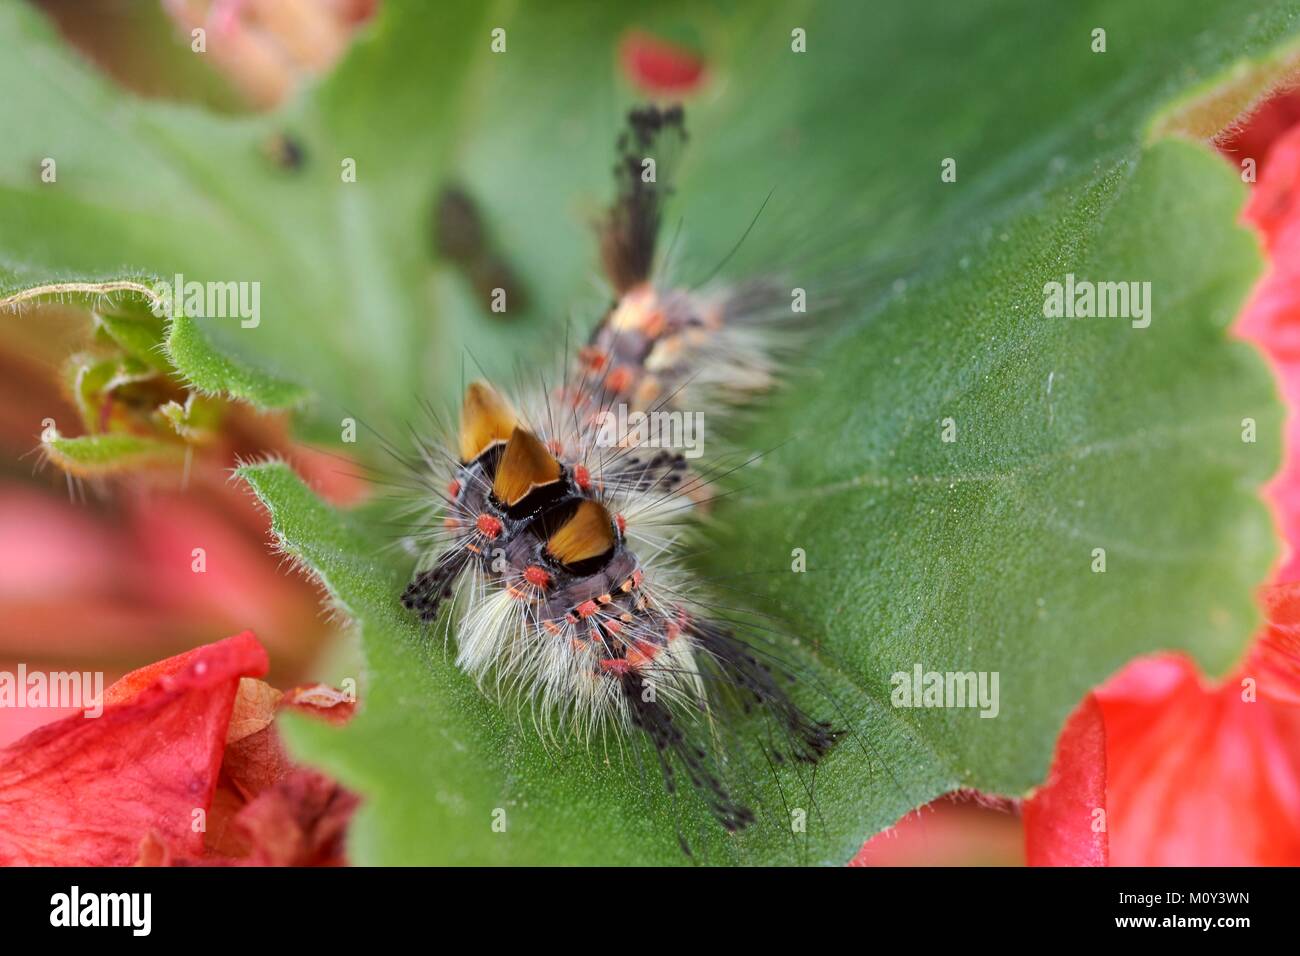 France, Morbihan, Vannes, Lepidoptera, Lymantriidae, Rusty tussock moth (Orgyia antiqua) Stock Photo